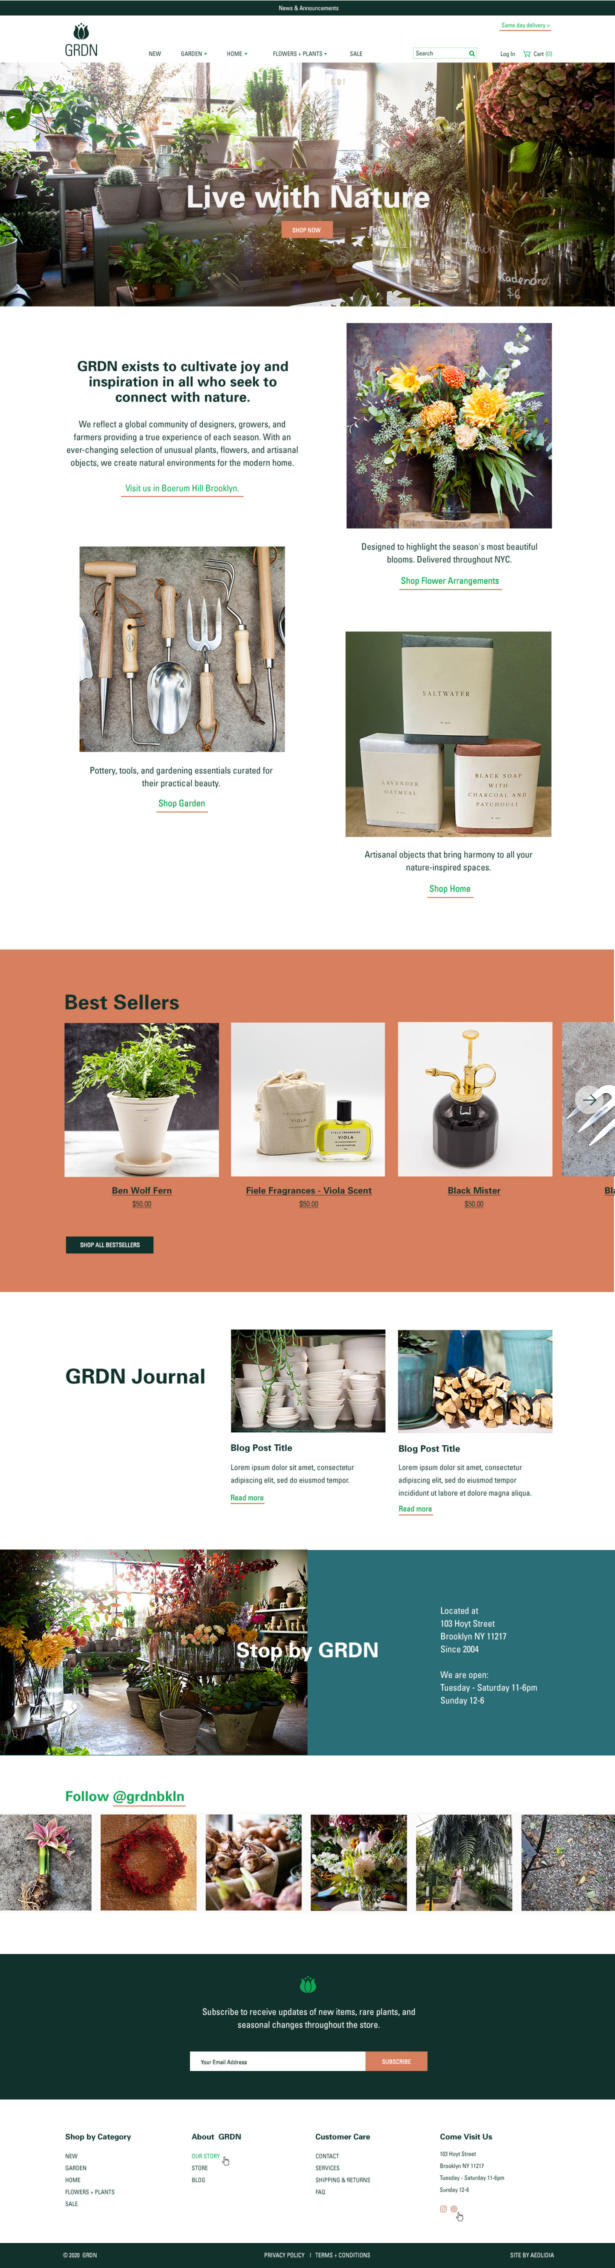 GRDN custom shopify website for a Brooklyn-based plant and flower shop